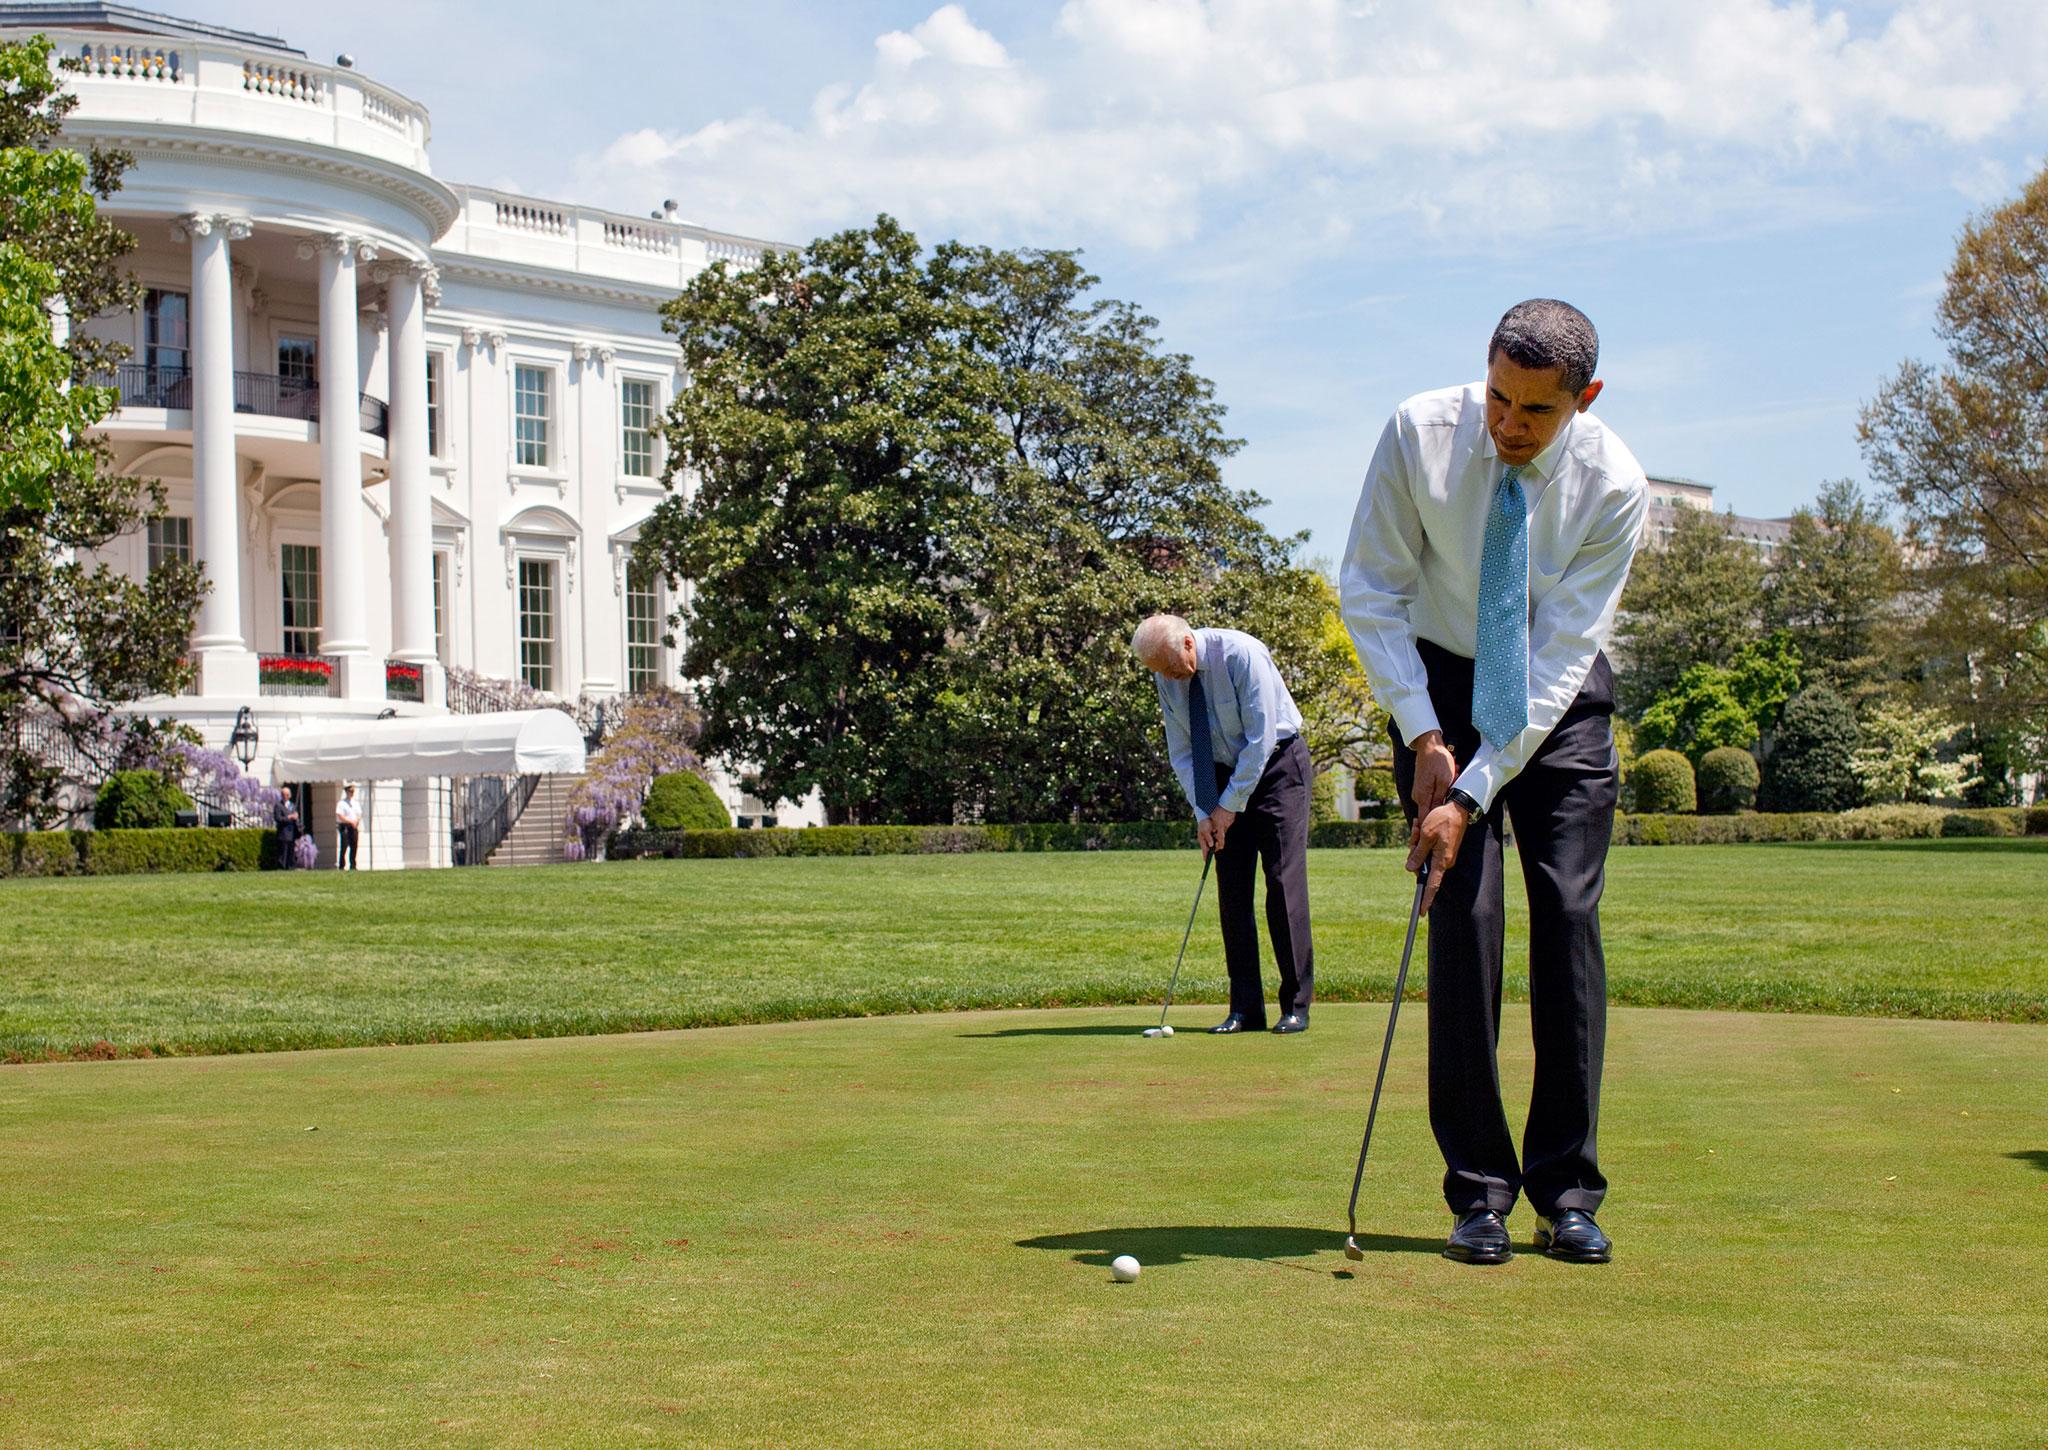 Barack Obama and Joe Biden putt on the White House putting green